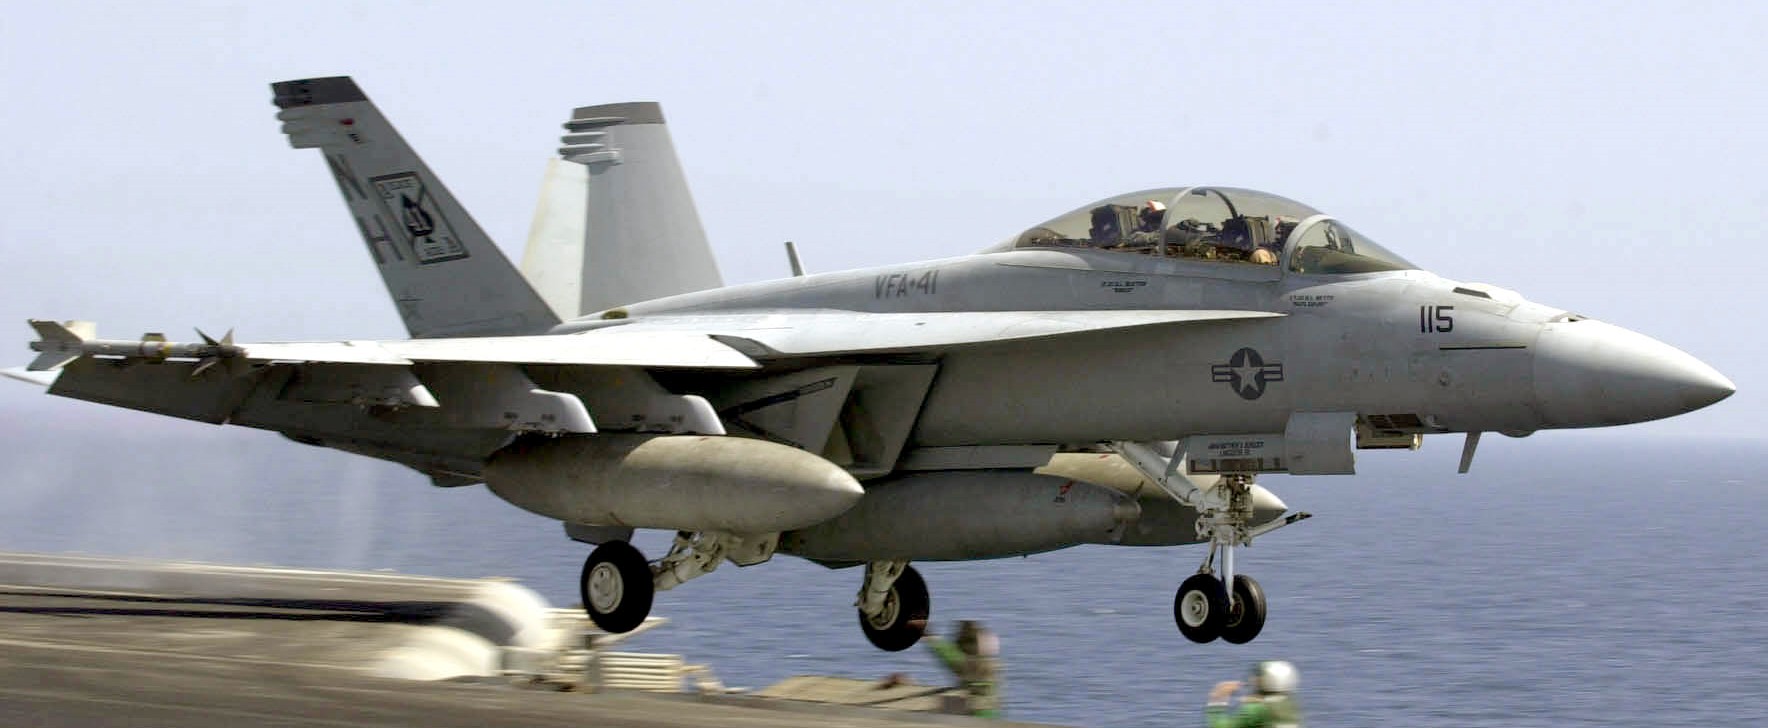 vfa-41 black aces strike fighter squadron f/a-18f super hornet cvw-11 cvn-68 uss nimitz us navy 185p